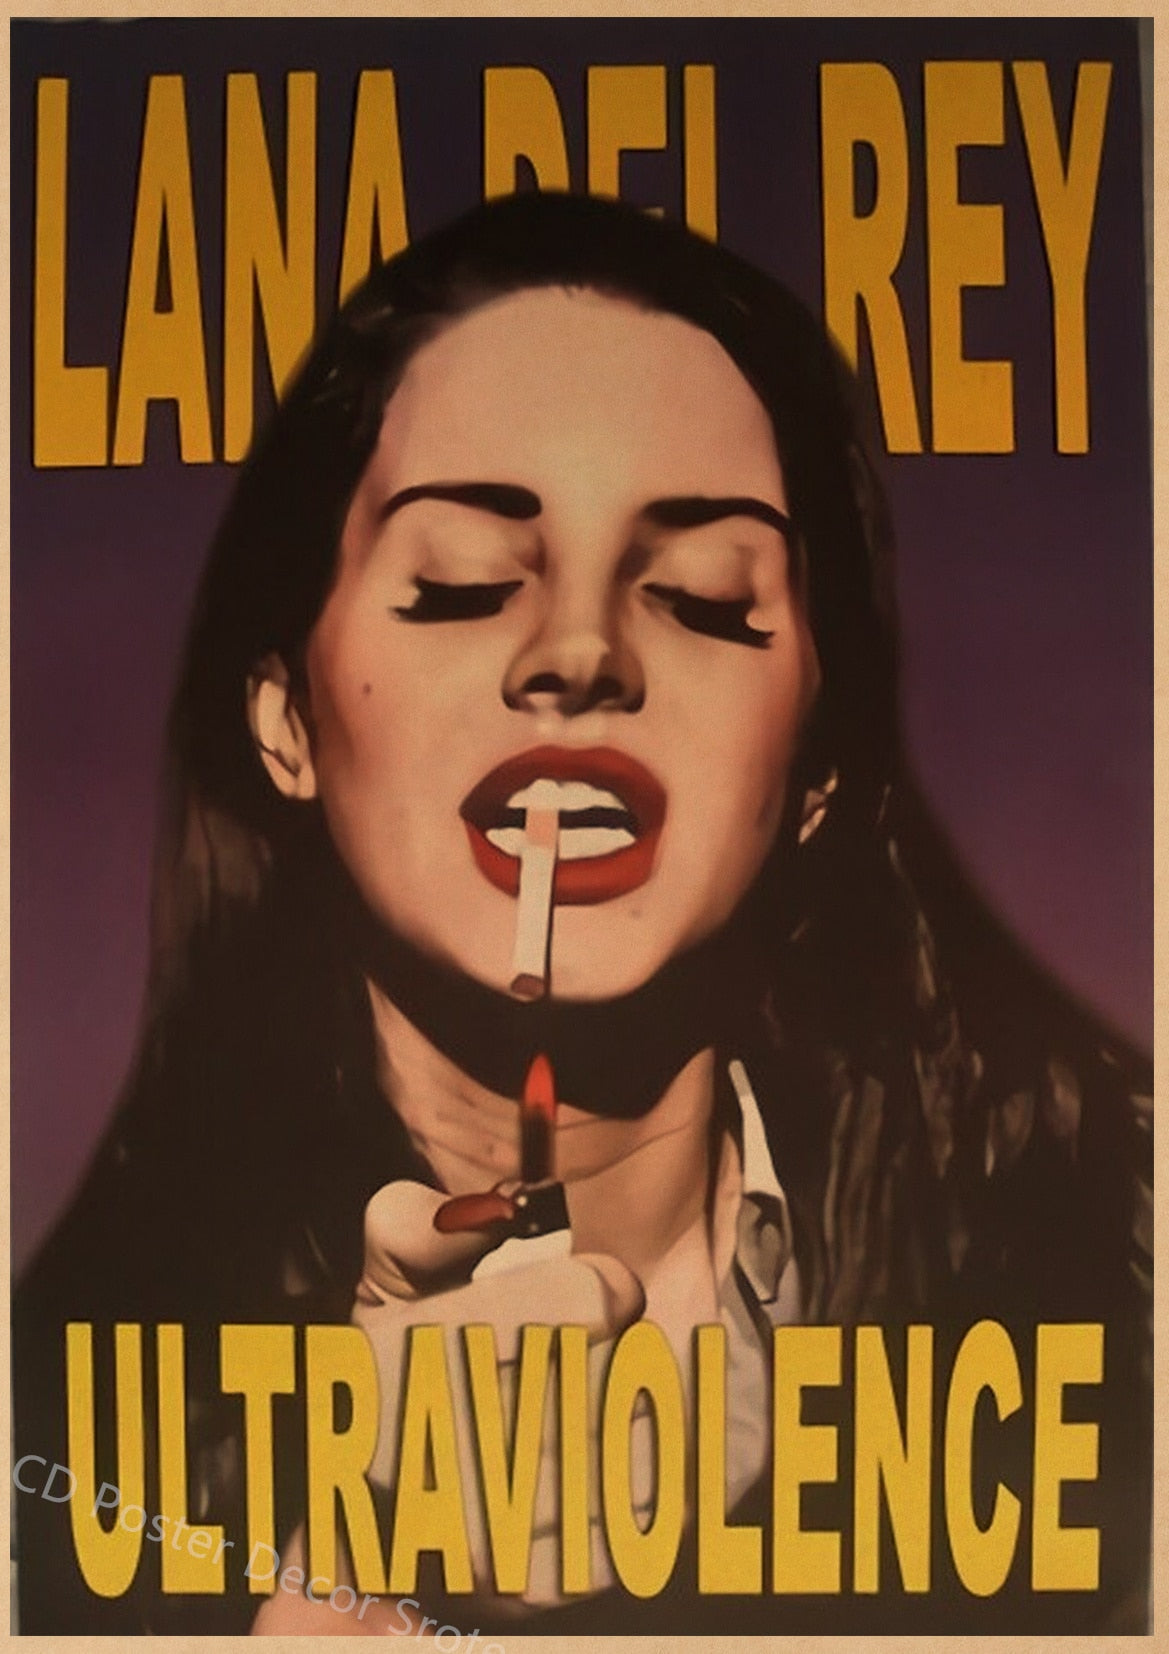 Hot Singer Lana Del Rey Retro Poster Kraft Paper Prints Posters DIY Vintage Home Room Bar Cafe Decor Aesthetic Art Wall Painting